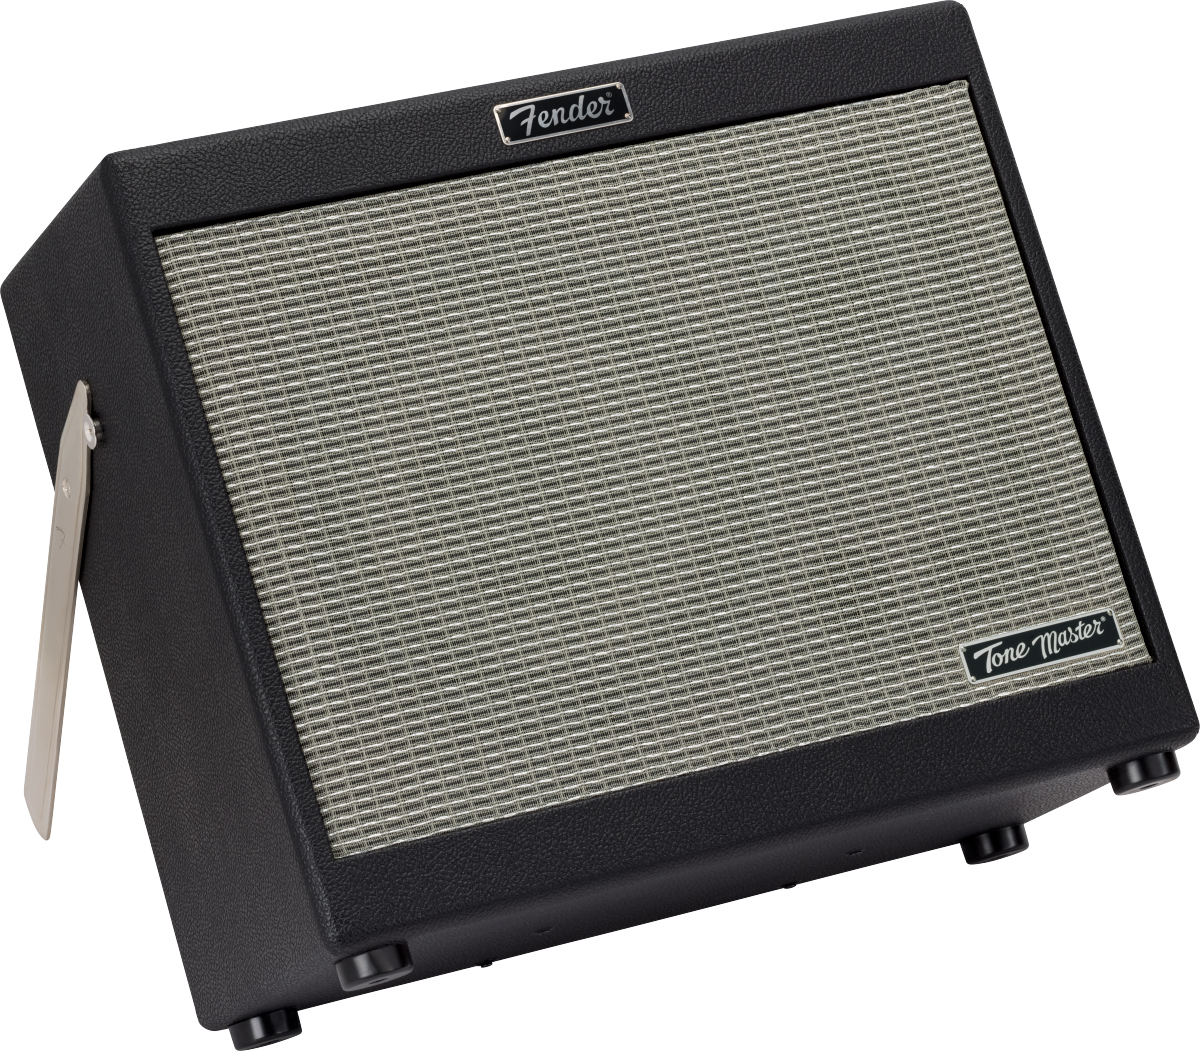 Fender Tone Master Fr-10 Powered Speaker Cab 1x10 1000w - Electric guitar combo amp - Variation 3